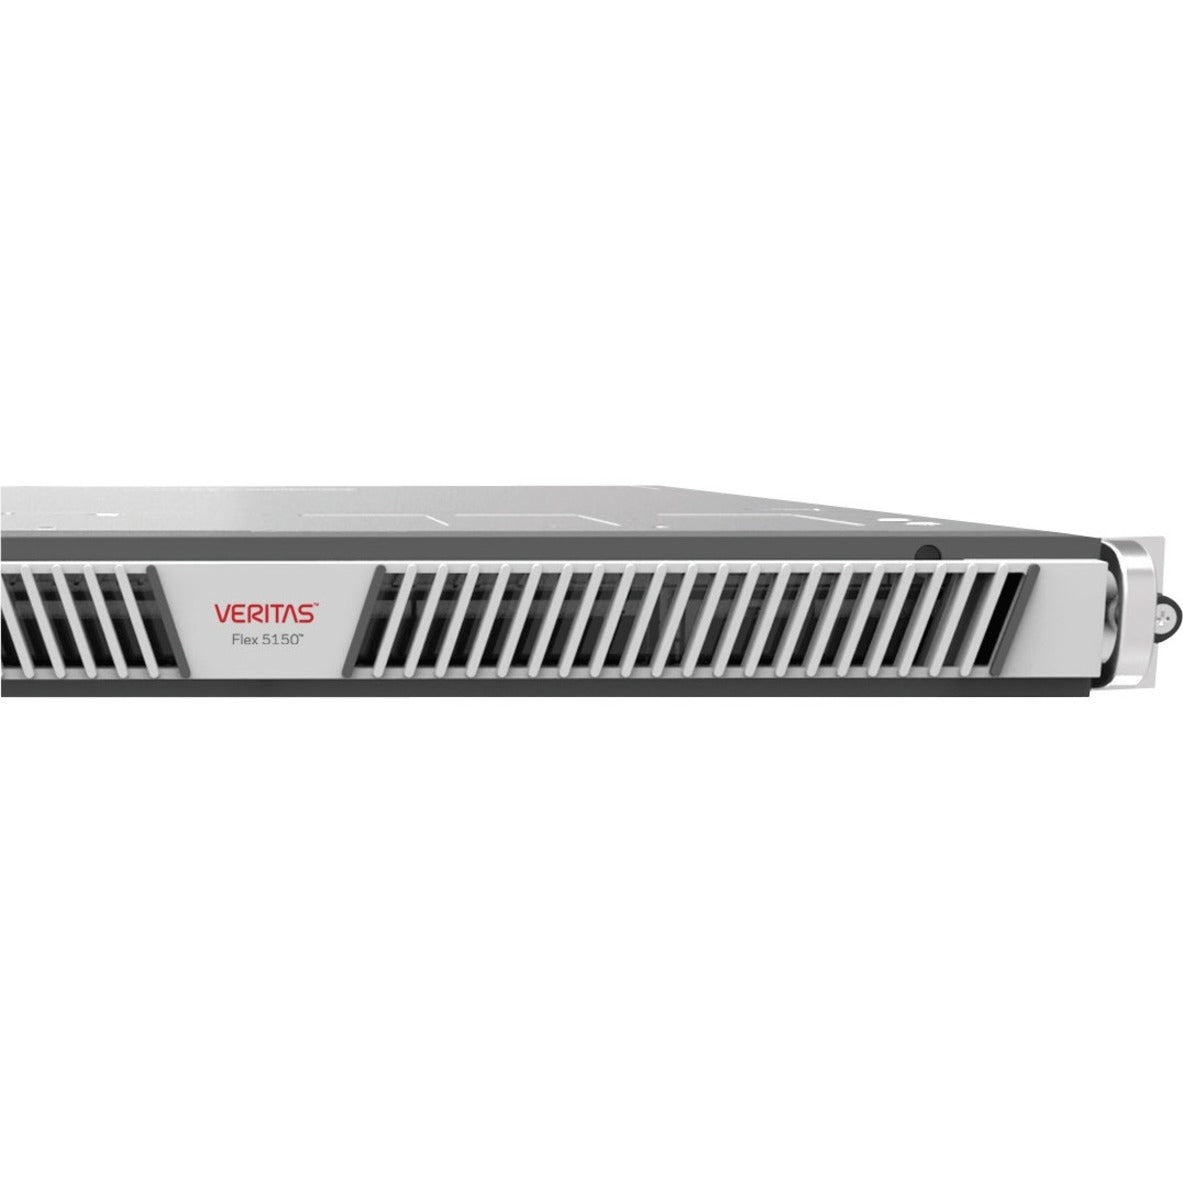 Veritas 26114-M0021 Flex System 5150 NAS Storage System, 15TB Total Hard Drive Capacity Installed, 12Gb/s SAS Controller, 8 Network (RJ-45) Ports